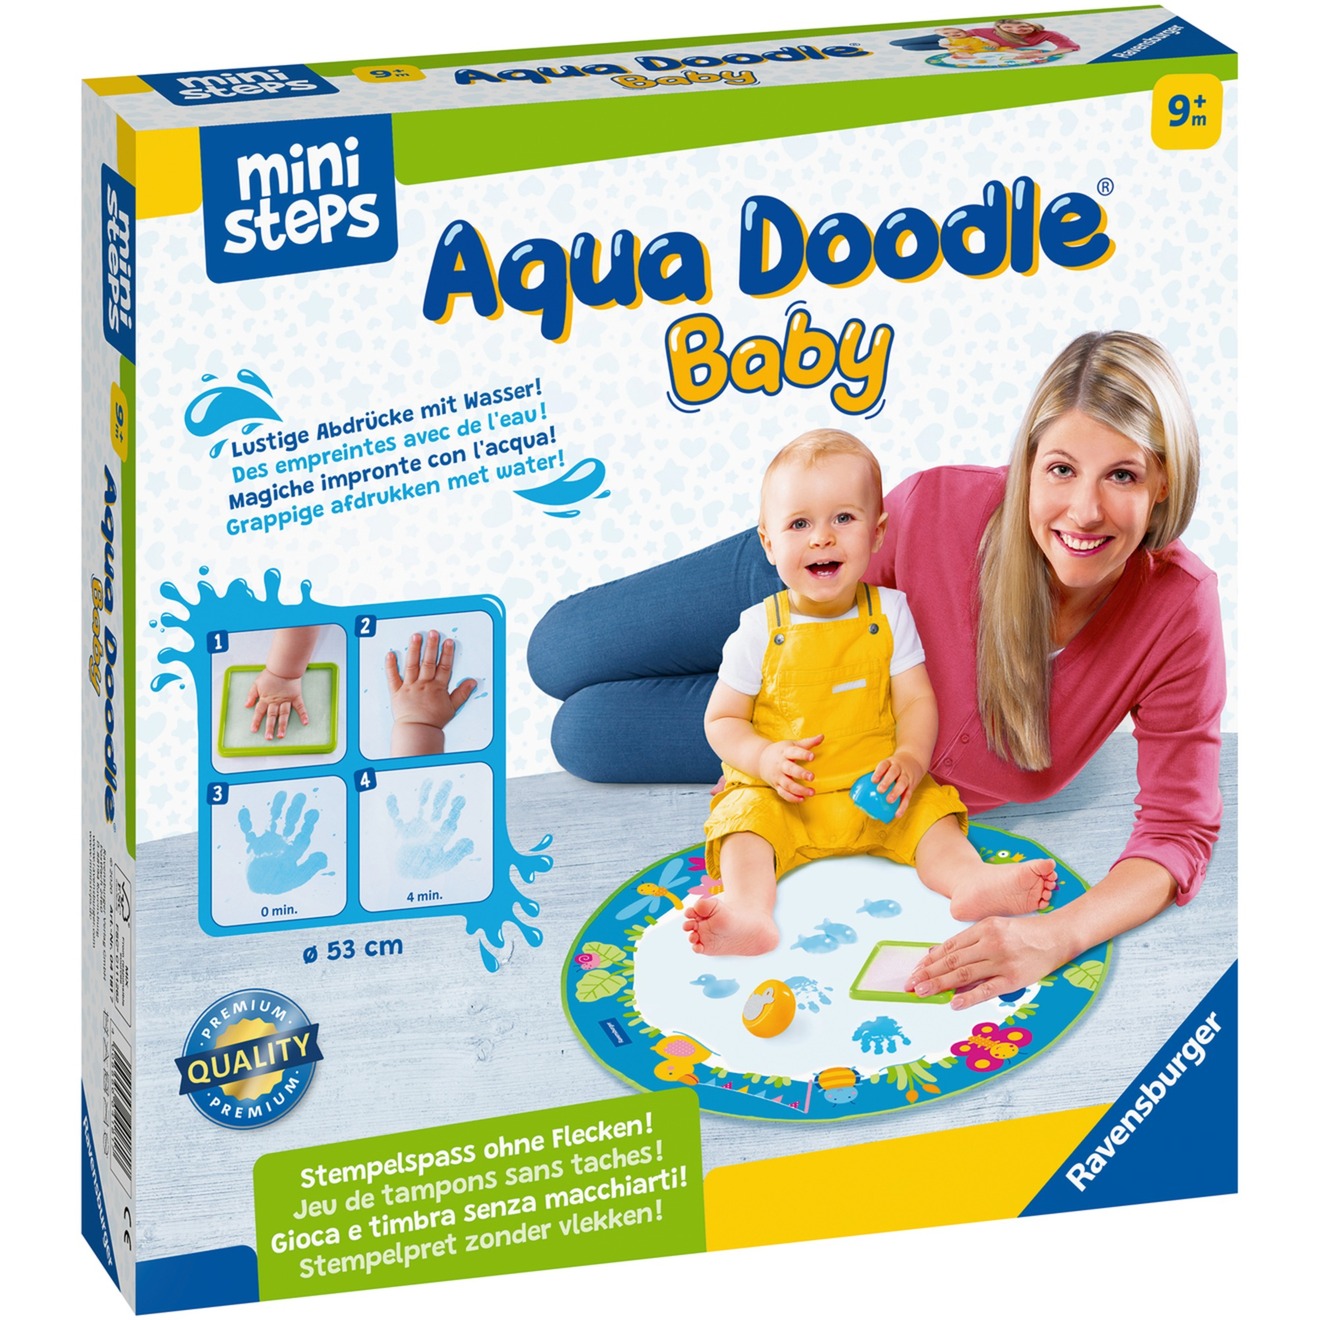 ministeps: Aqua Doodle Baby, Malen